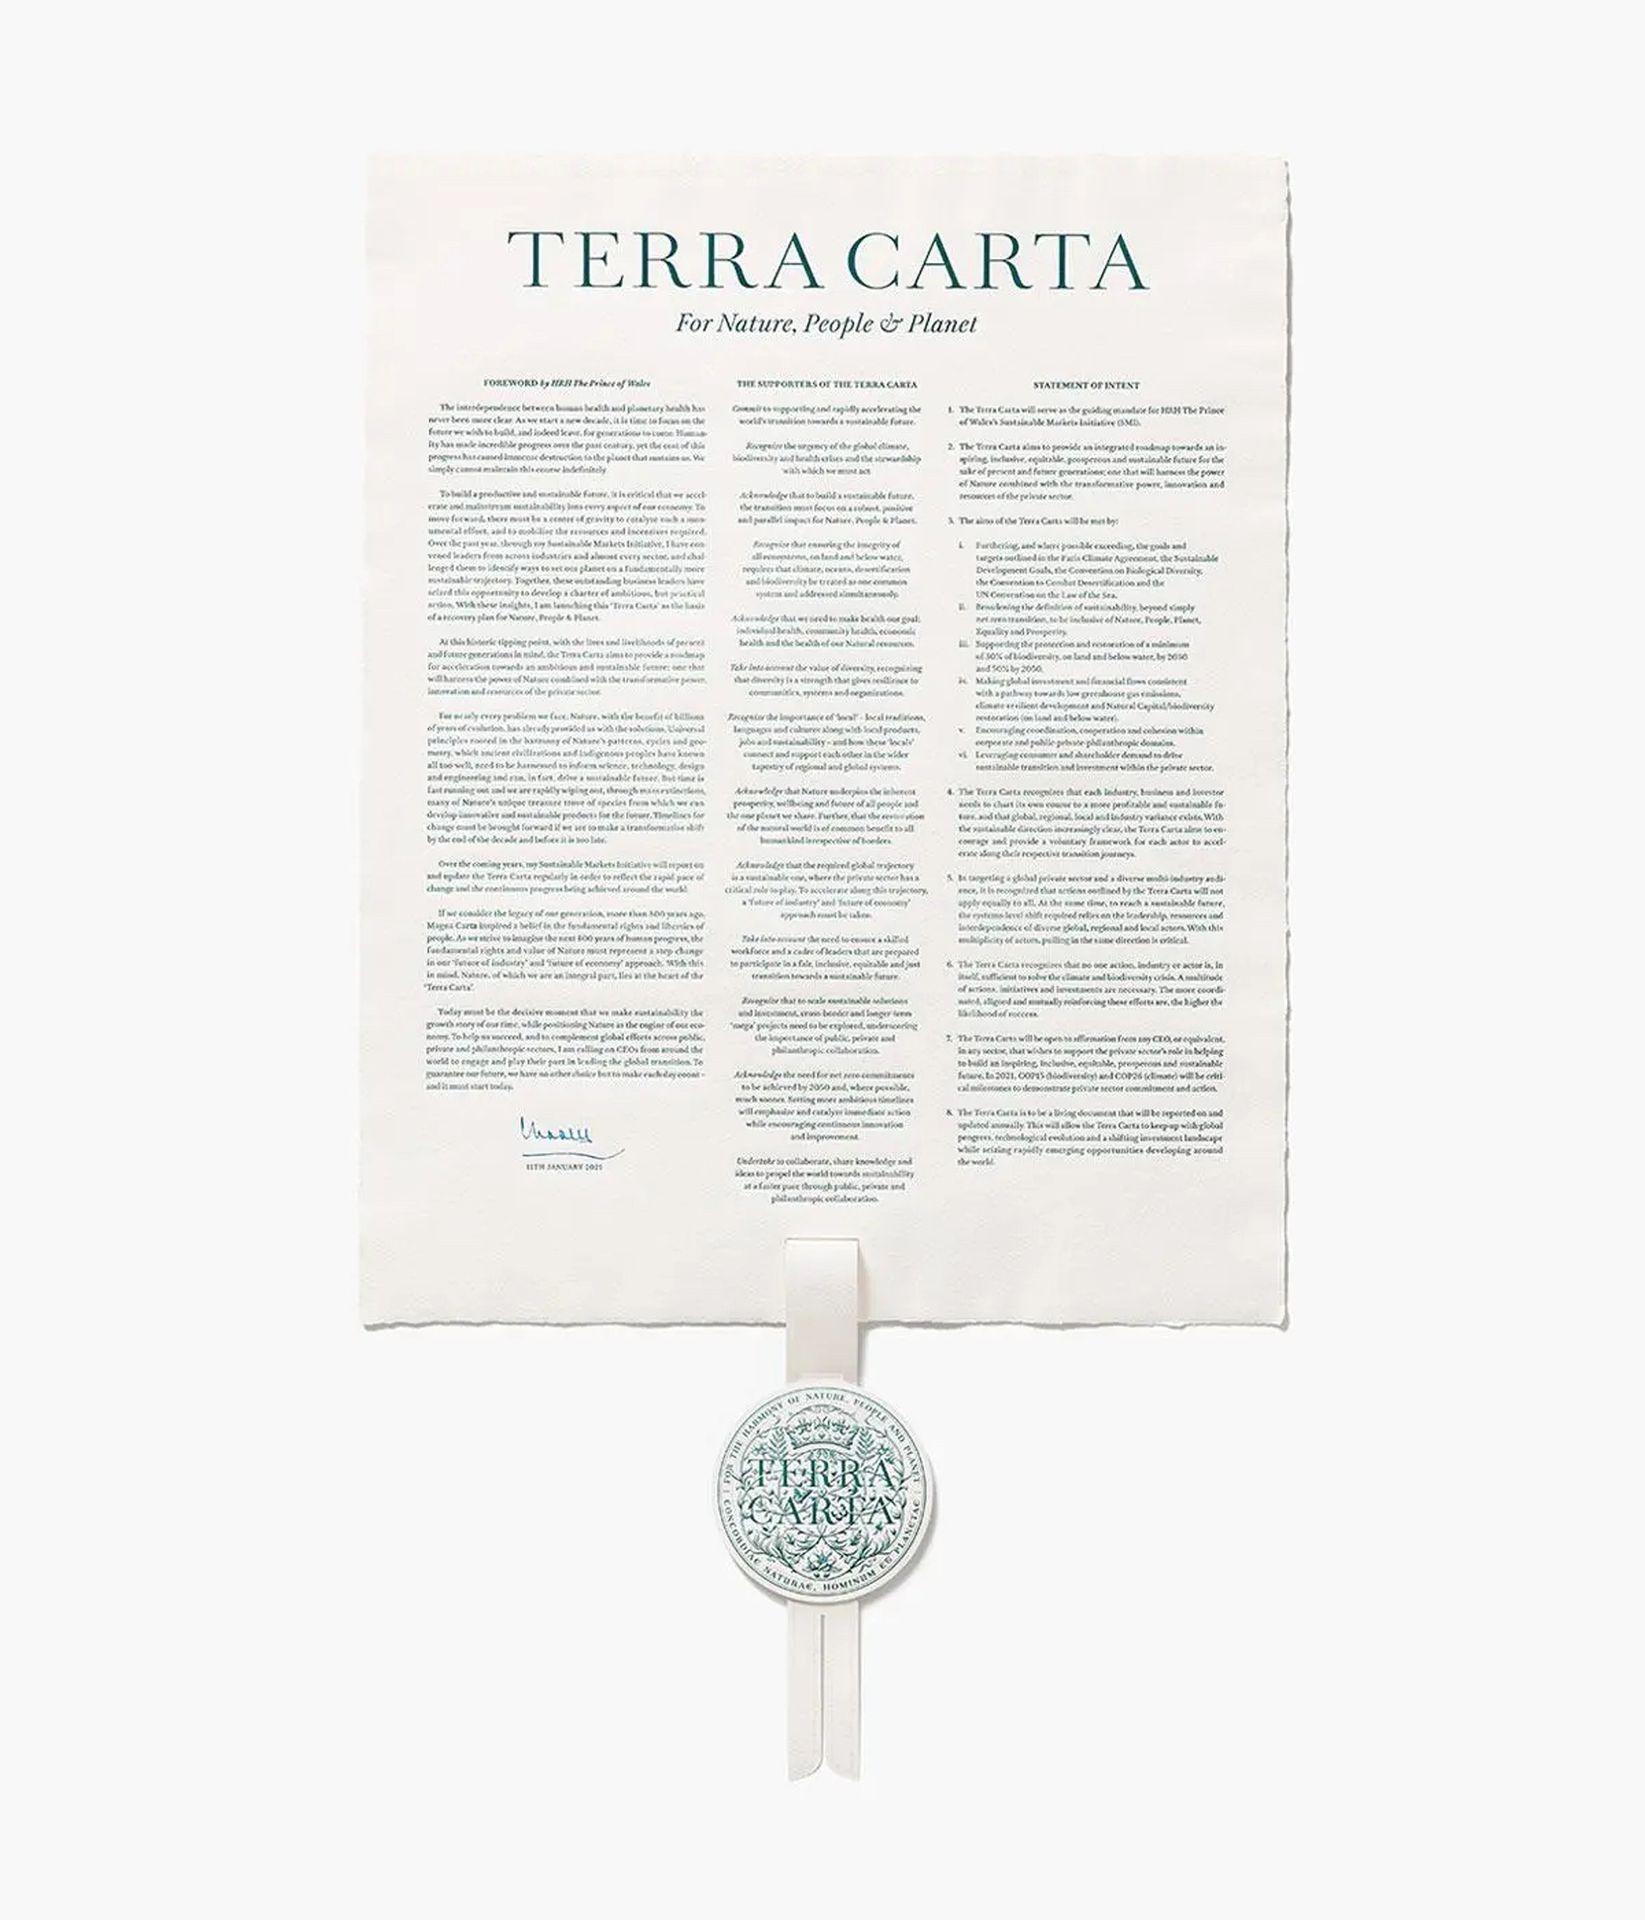 idm_terra_carta_certificat_by_lovefrom_photo_et_copyright_lovefrom_courtesy_terra_carta_idm_02.jpg